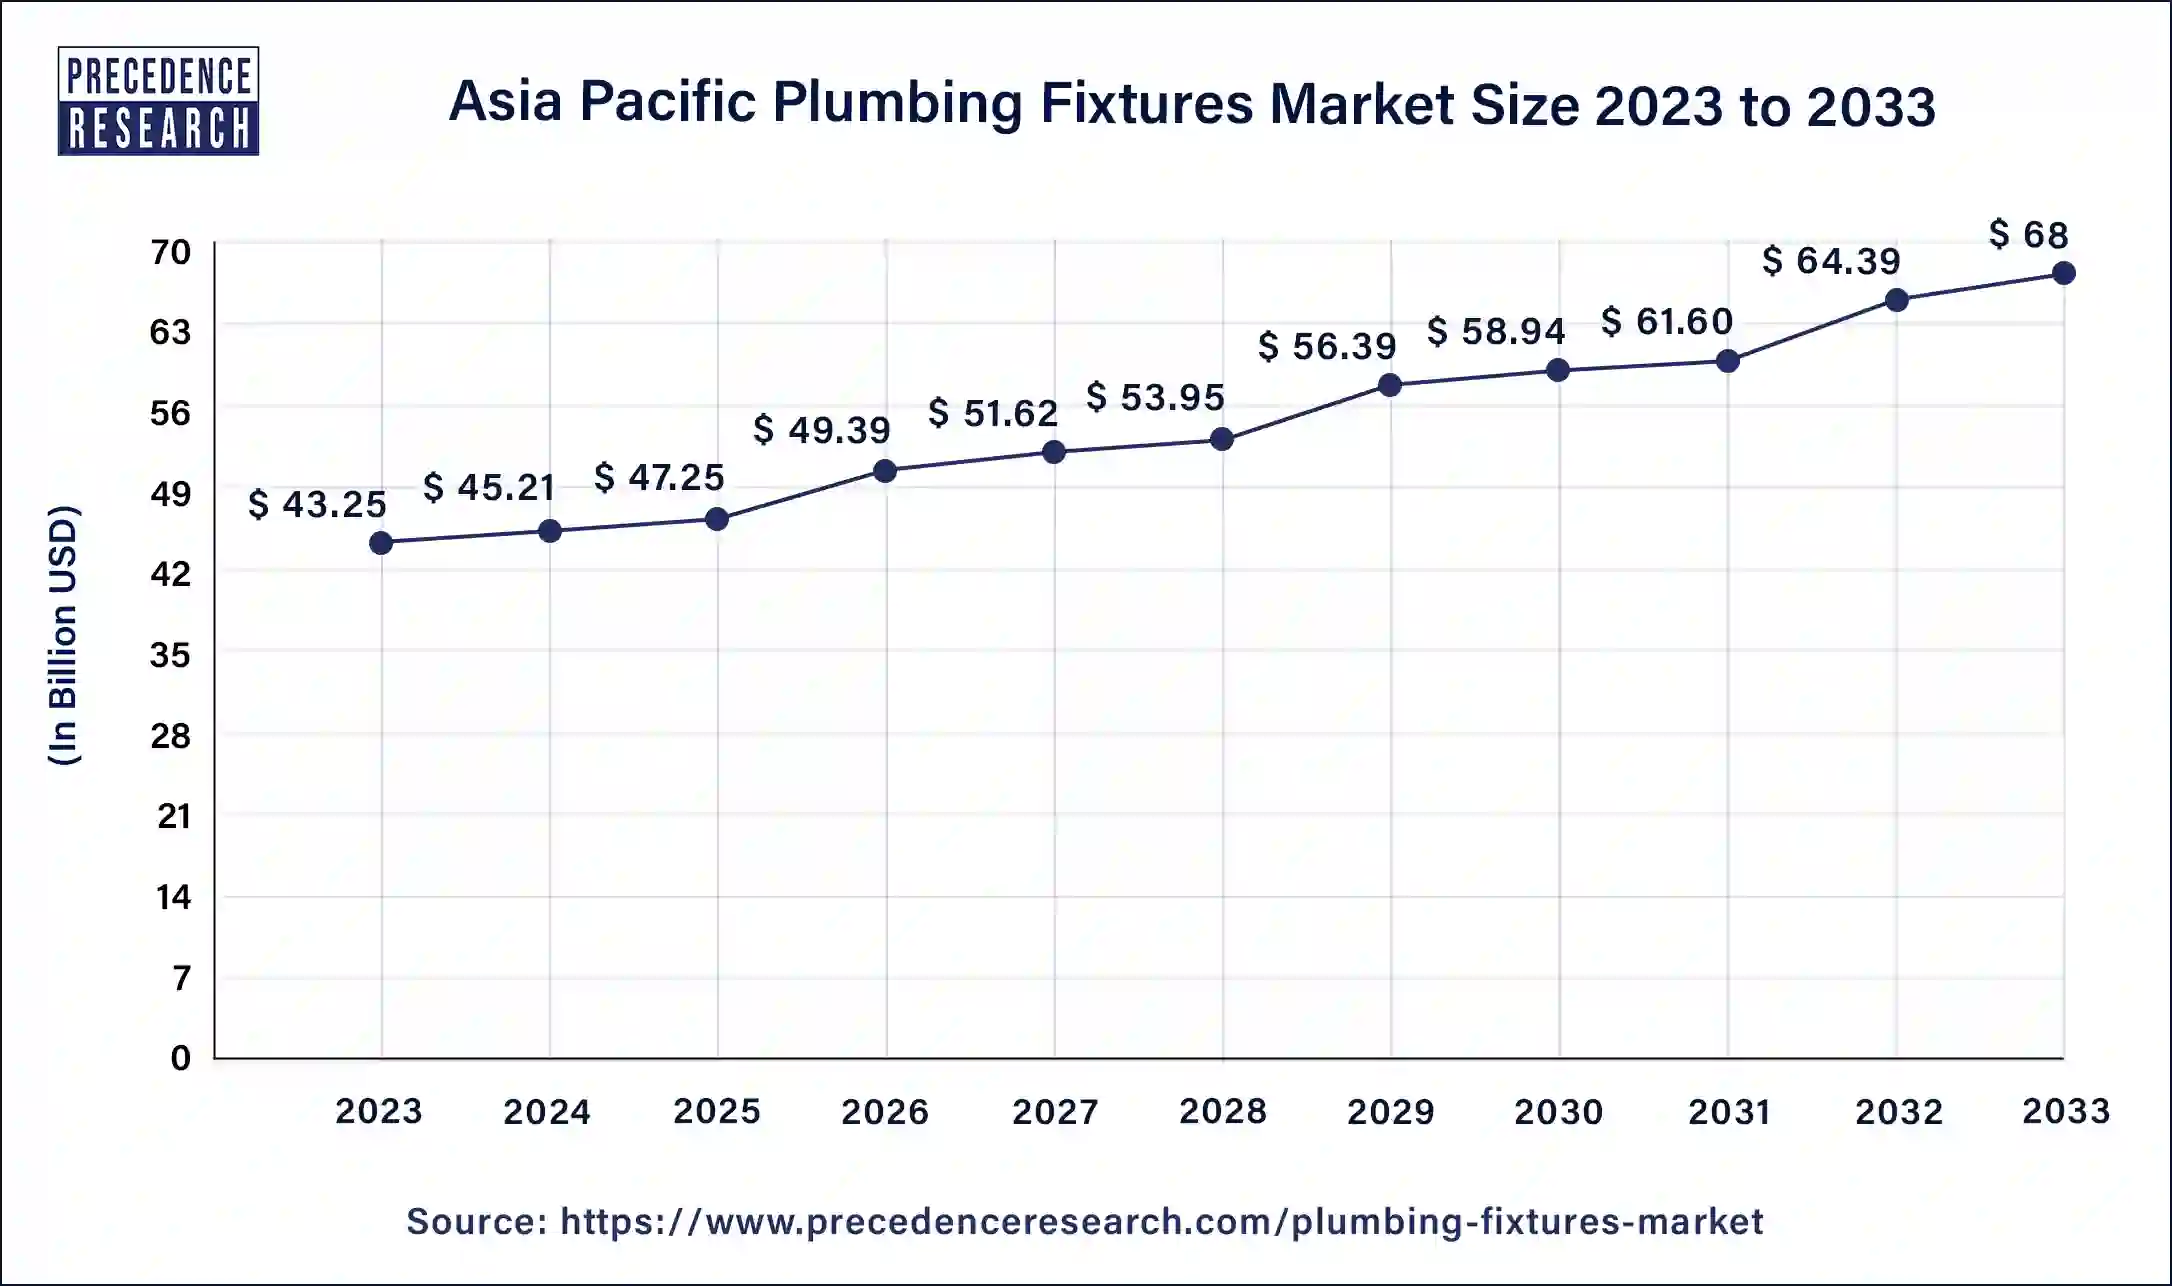 Asia Pacific Plumbing Fixtures Market Size 2024 to 2033